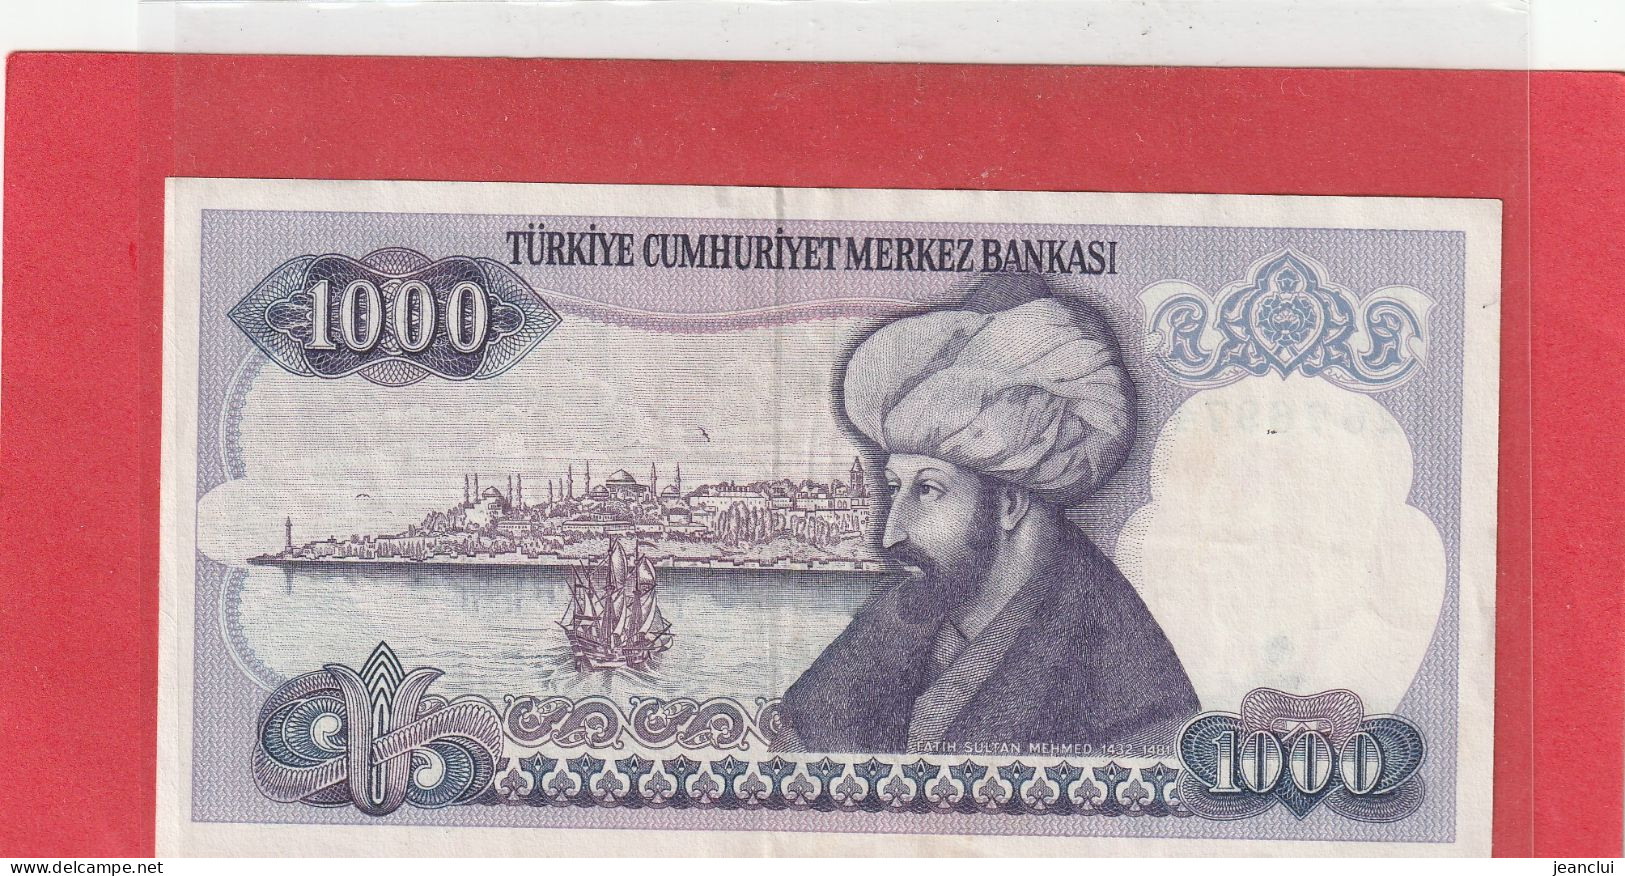 TURKIYE CUMHURIYET MERKEZ BANKASI . 1.000 LIRA . 14 OCAK 1970  . N°  A26 769745 .  2 SCANNES  .  BILLET USITE - Turkey